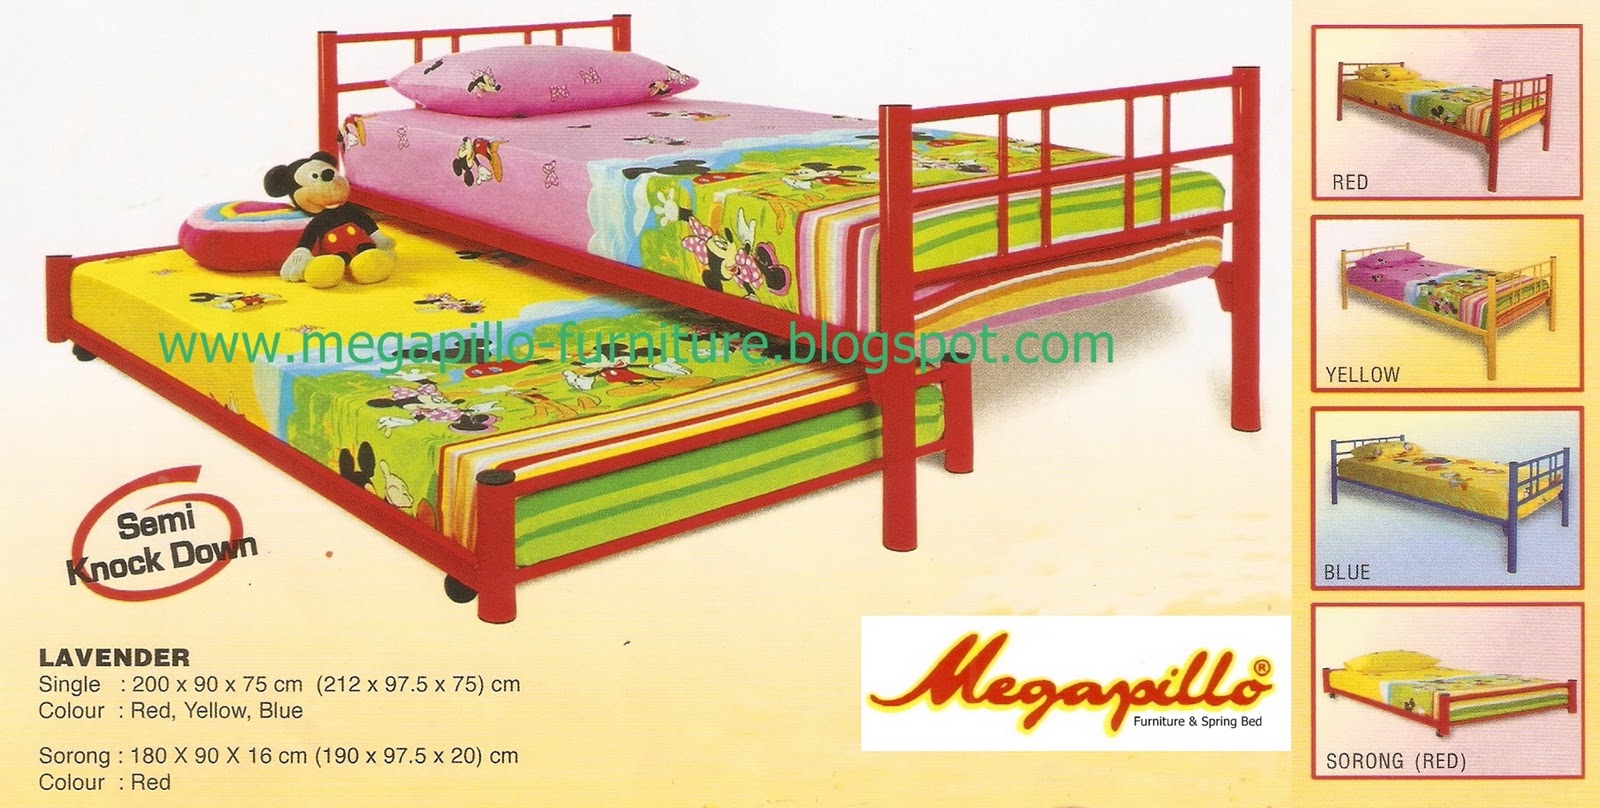 Megapillo Furniture Spring Bed Online Shop Ranjang Besi Sorong